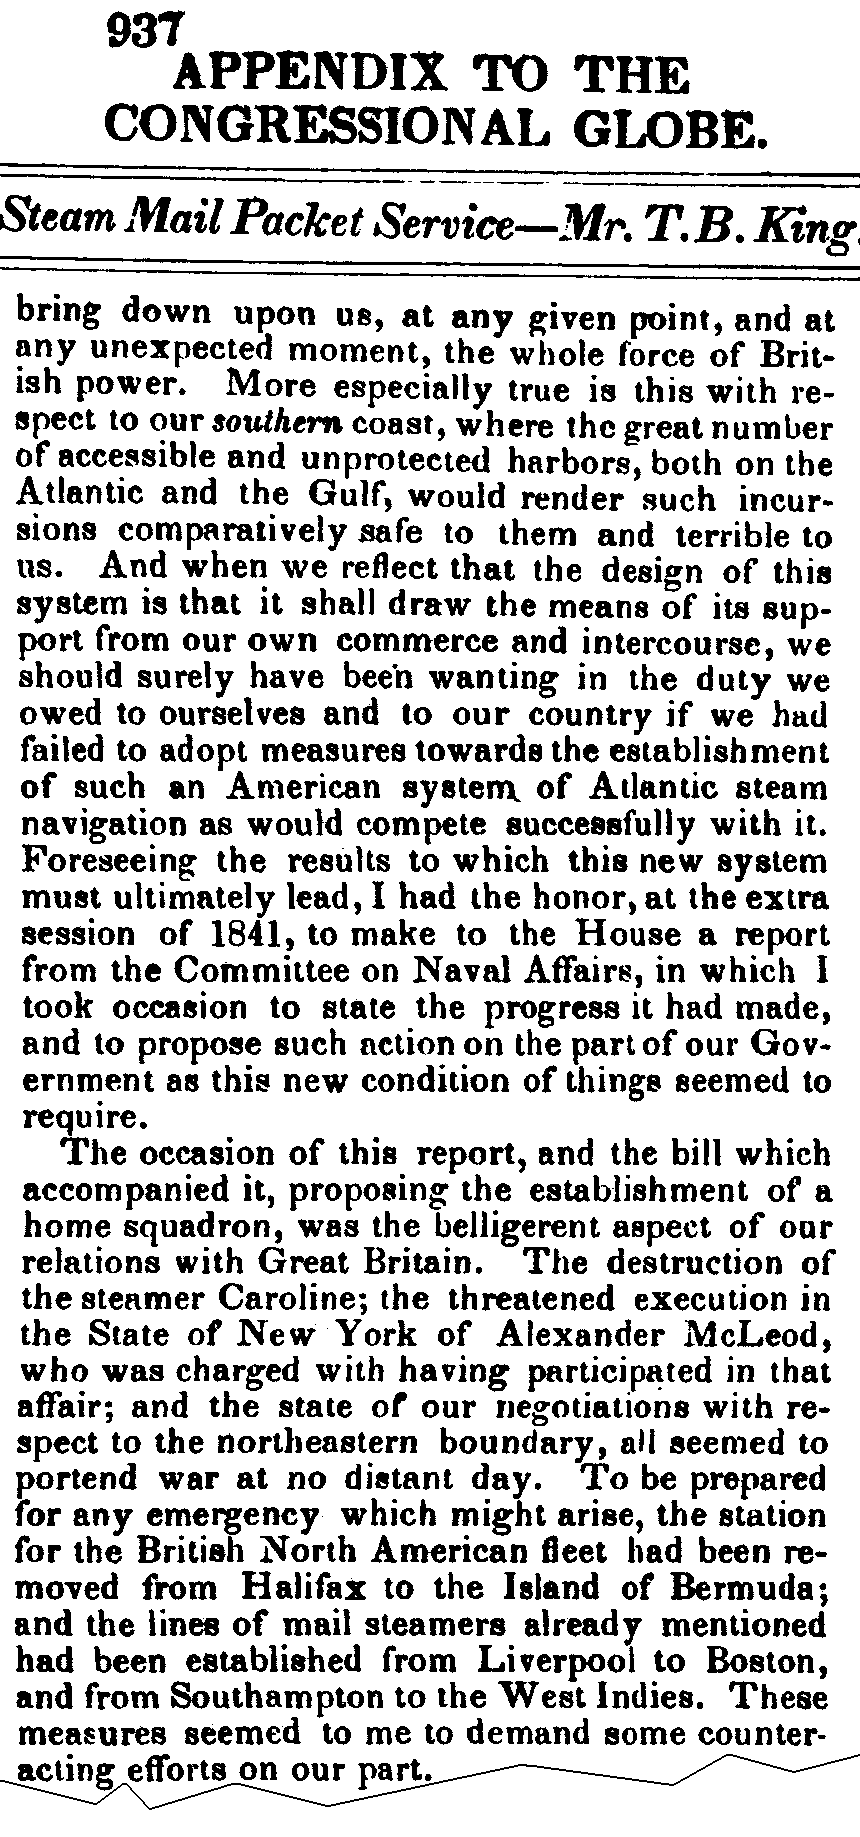 July 19, 1848: Cunard excerpts from Butler King's speech, page 937 column 2